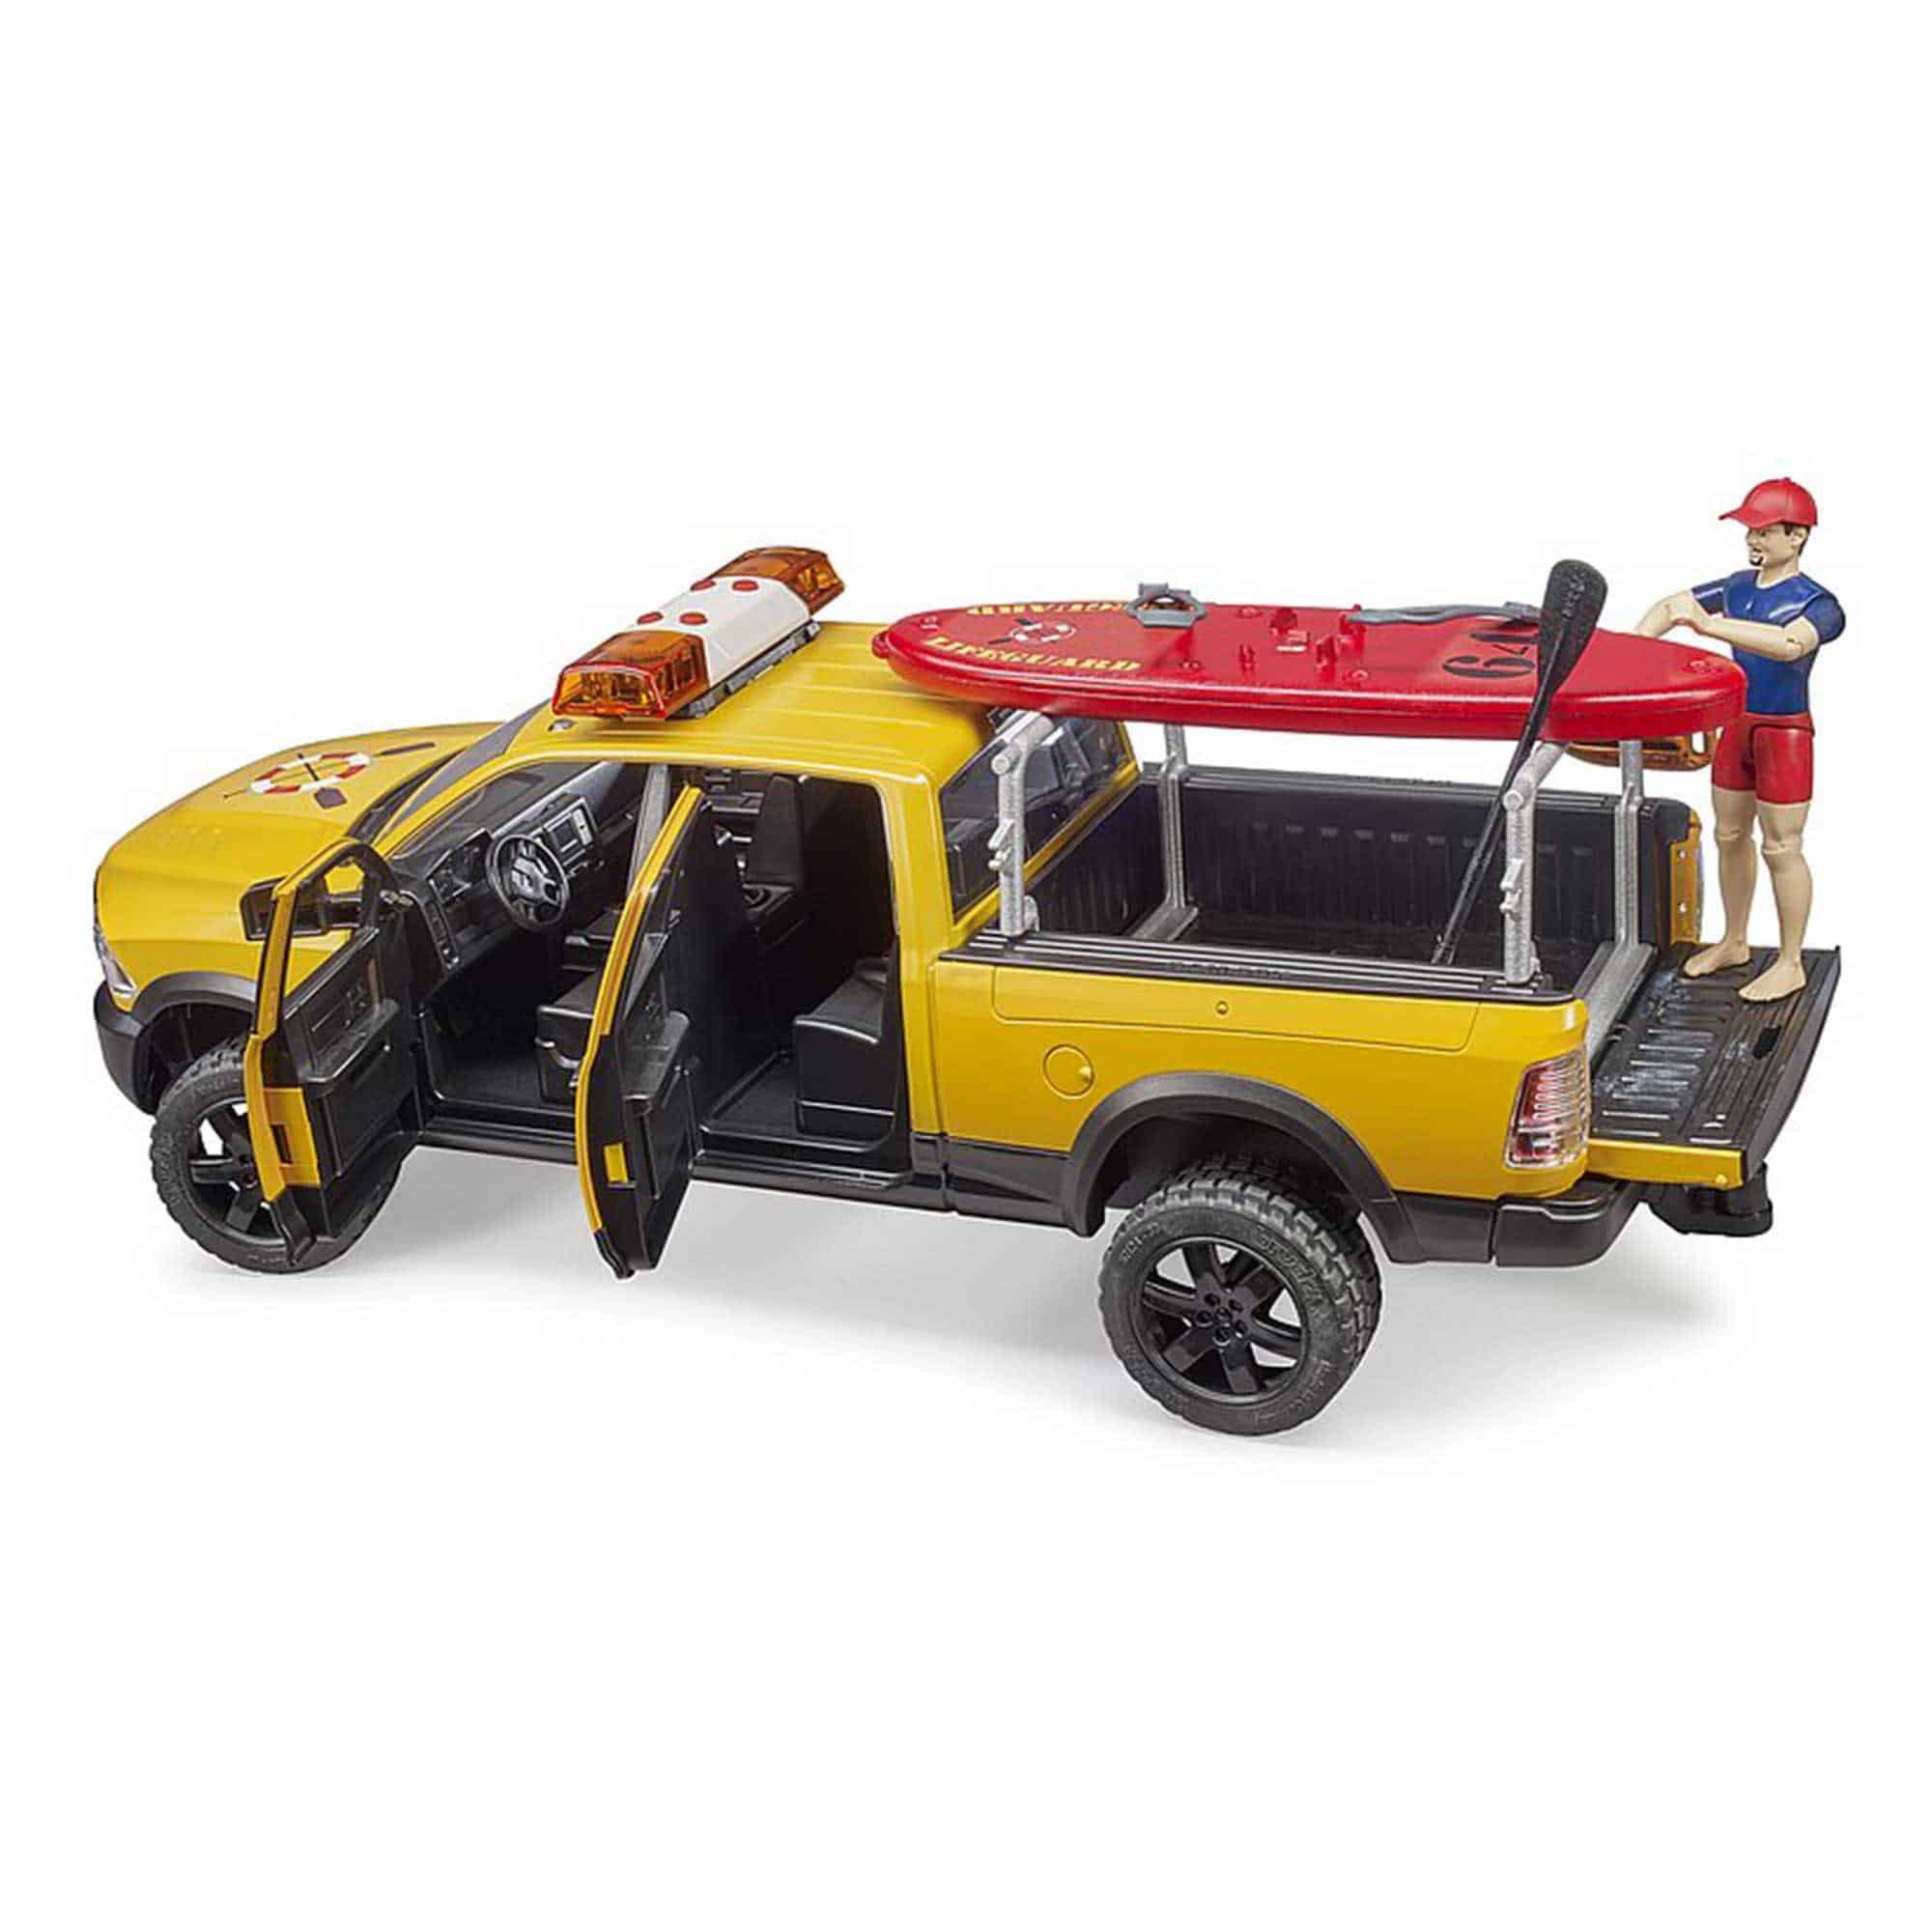 Bruder - RAM 2500 power wagon lifeguard with figure